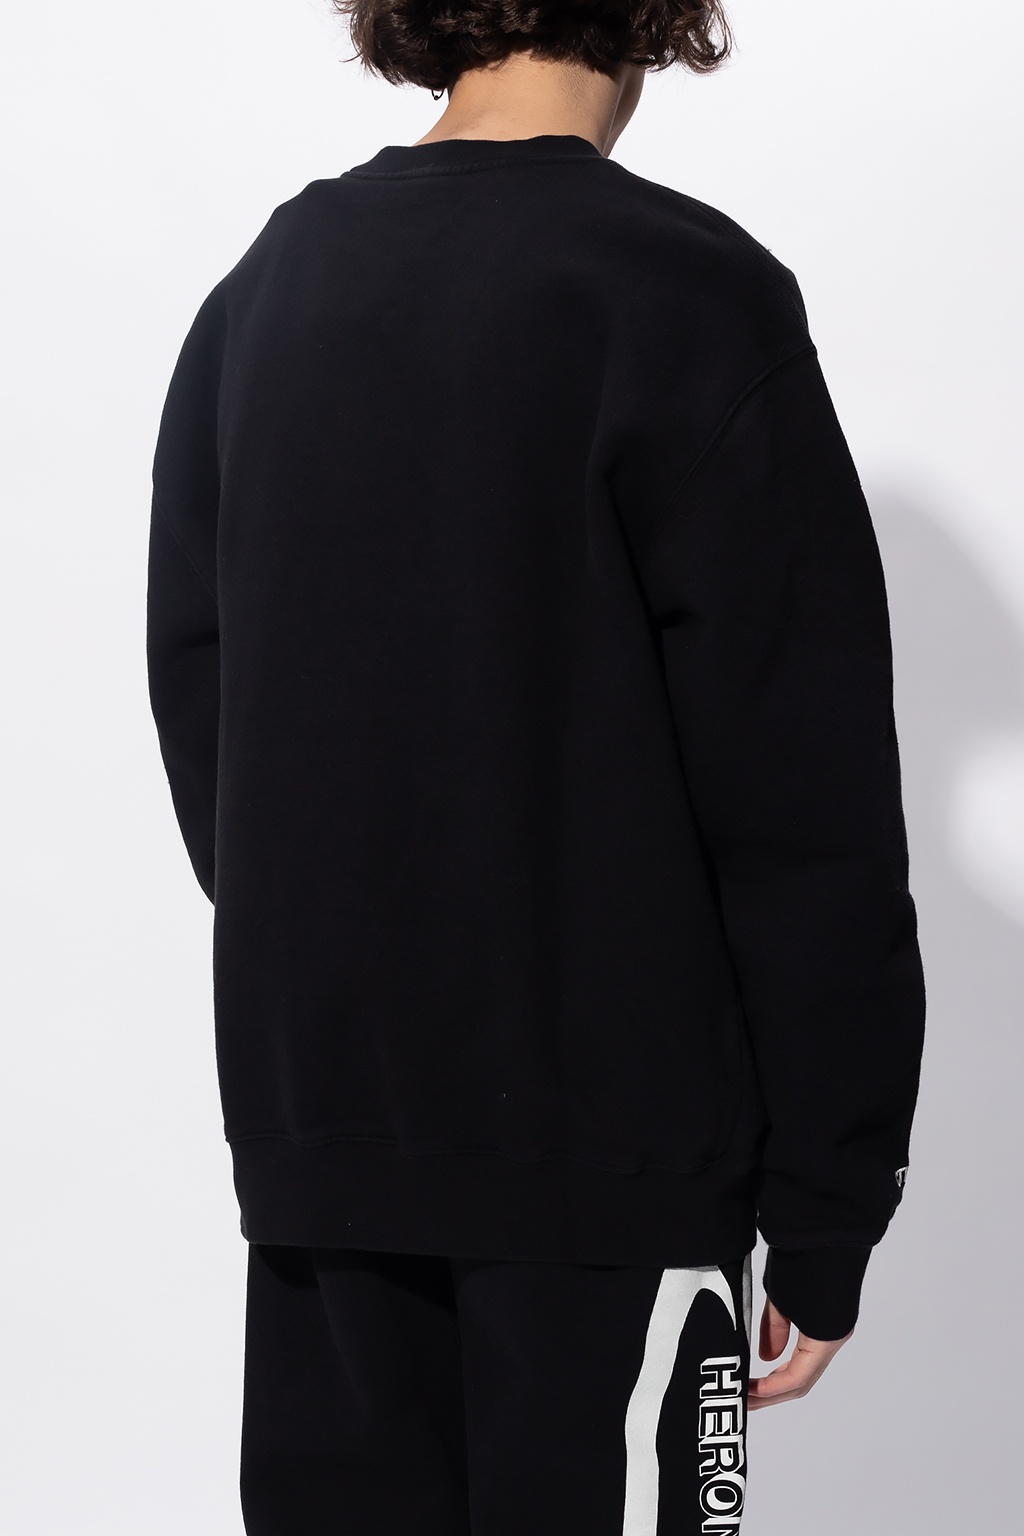 Heron Preston Branded sweatshirt | Men's Clothing | IicfShops